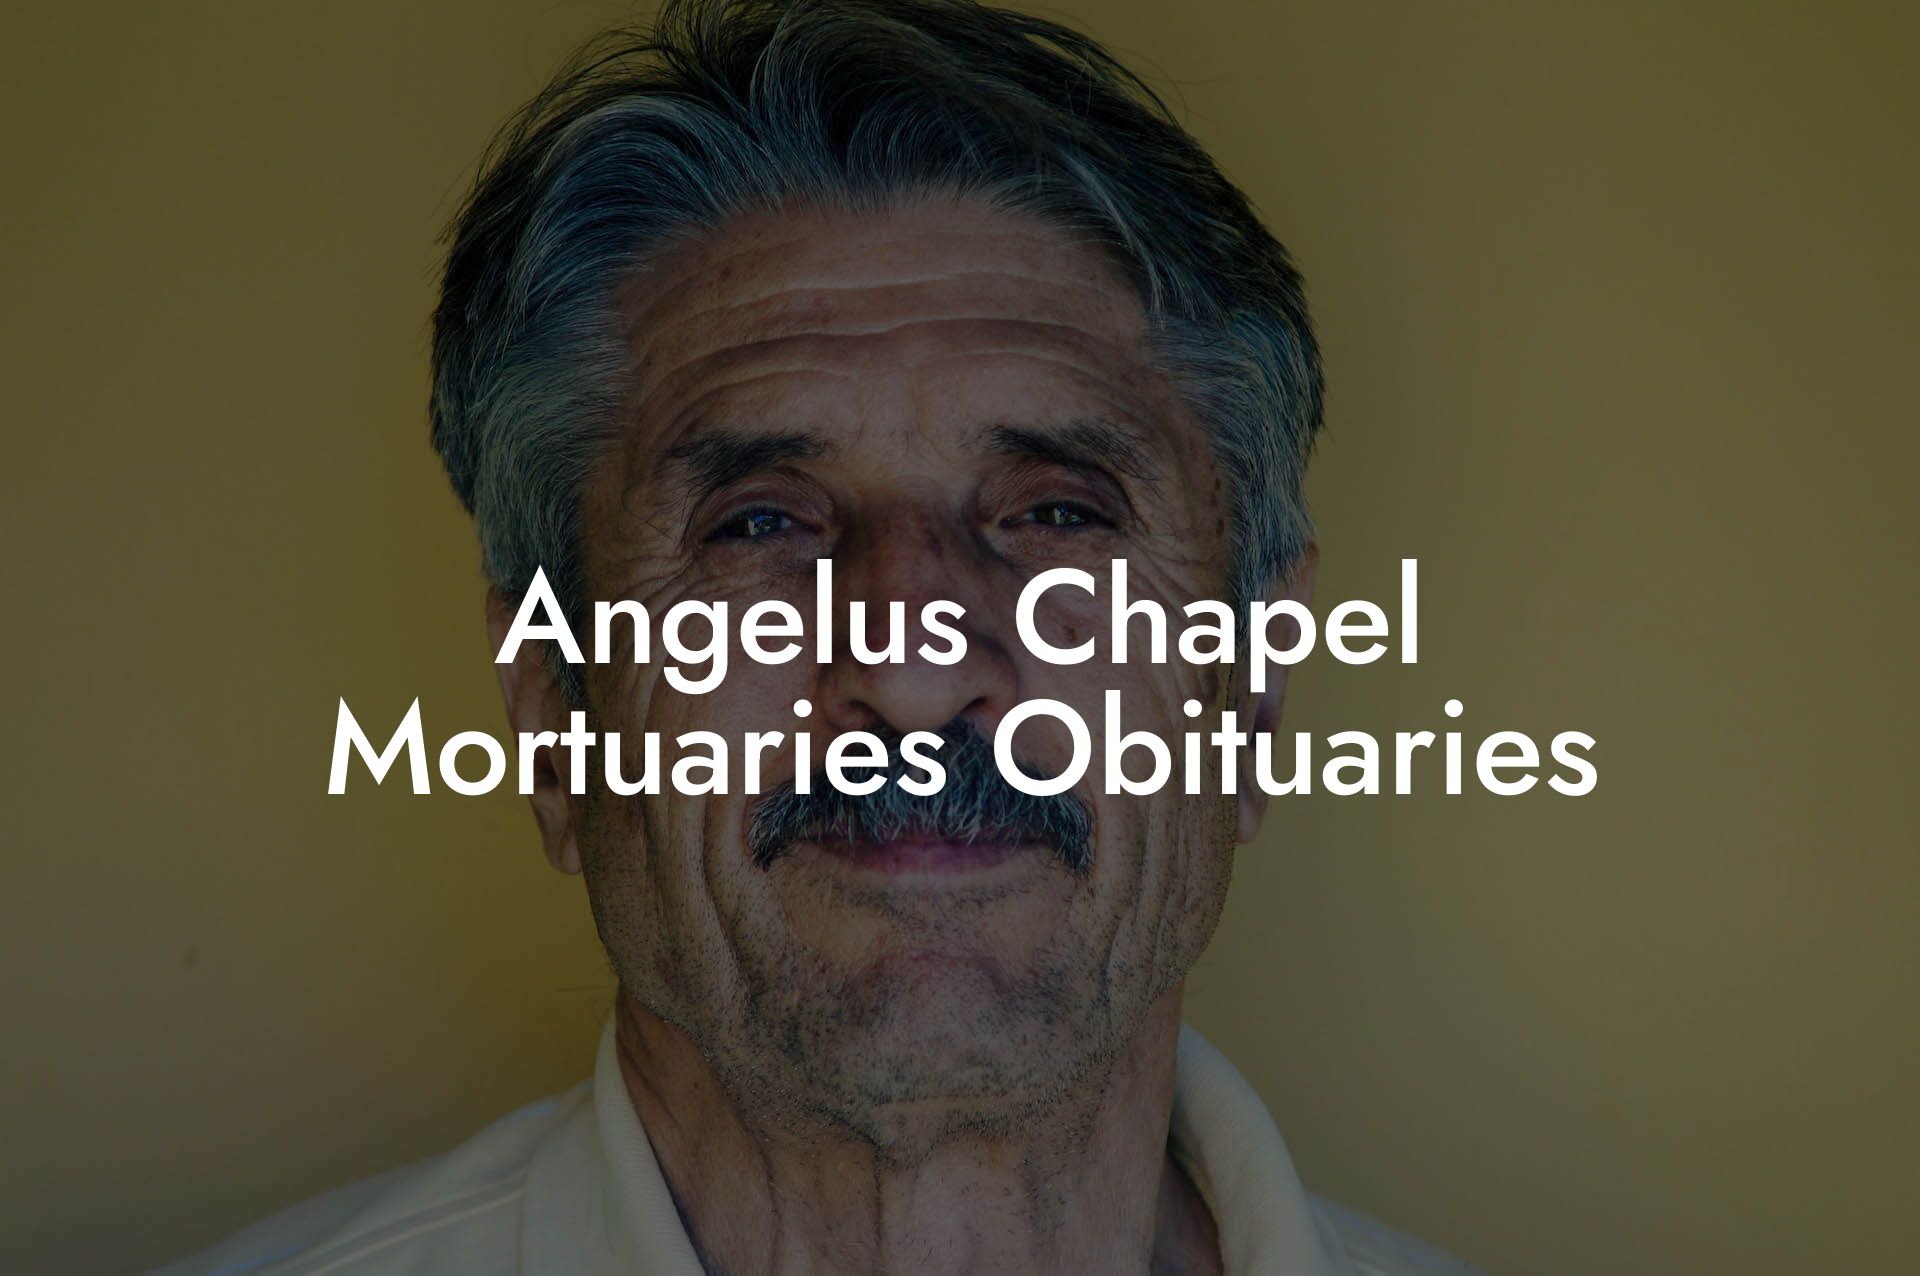 Angelus Chapel Mortuaries Obituaries